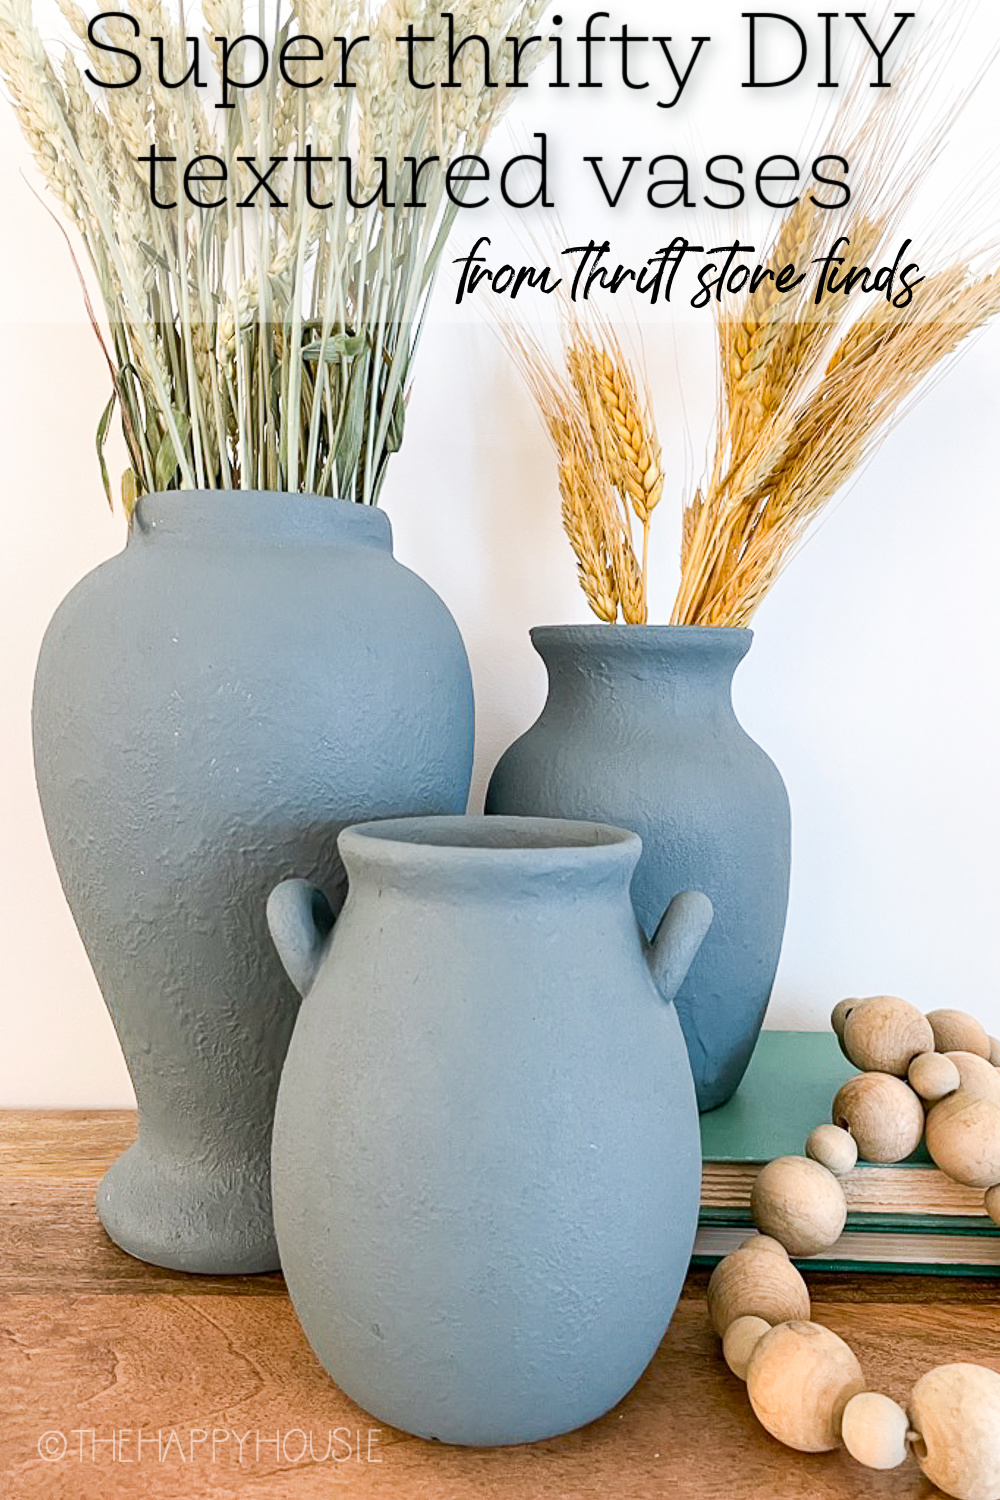 Super Thrifty DIY Textured Vases poster.